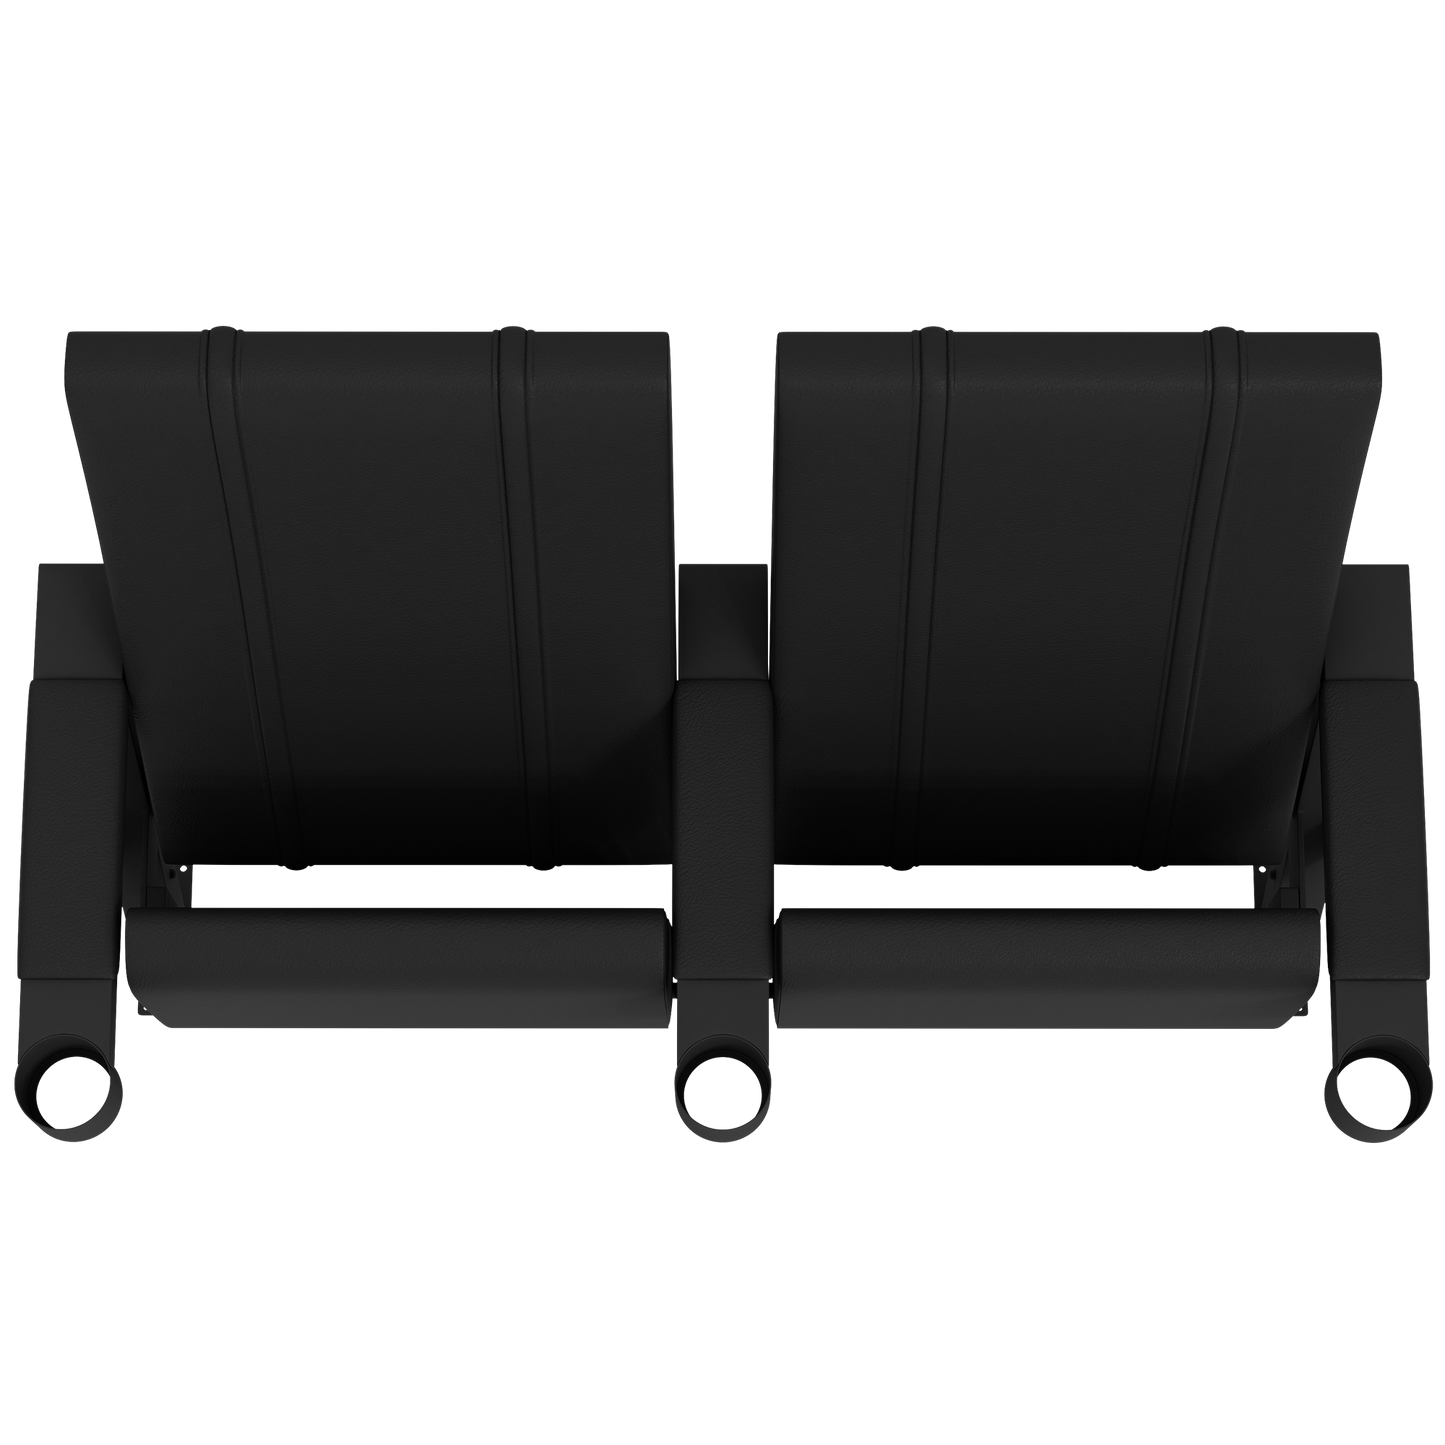 SuiteMax 3.5 VIP Seats with Virginia Tech Hokies Logo